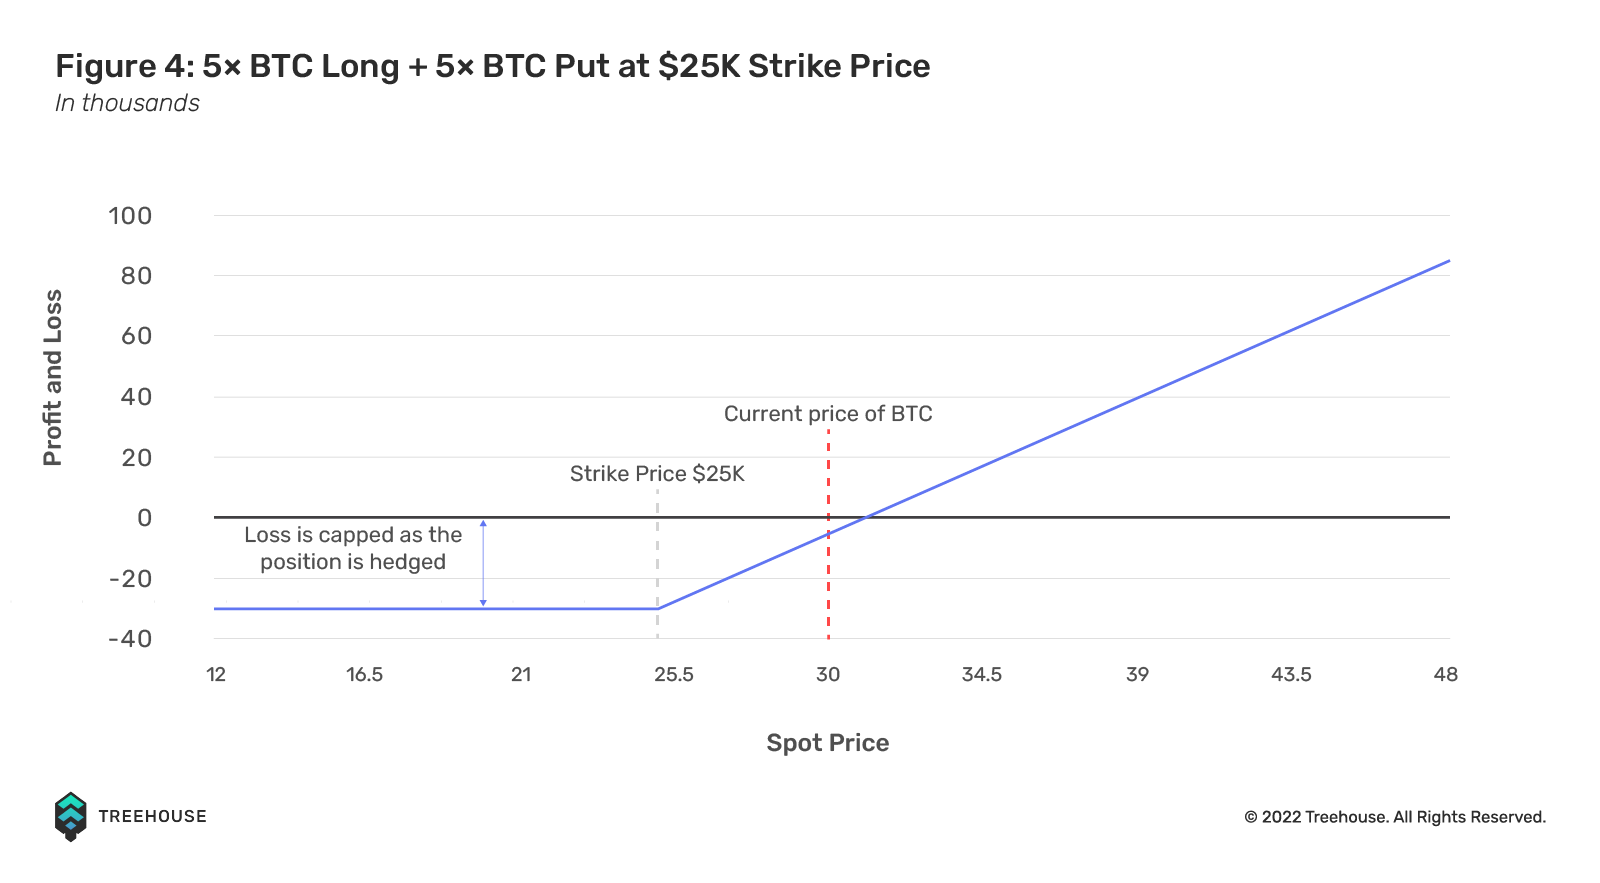 5x BTC Long + 5x BTC Put at $25K Strike Price